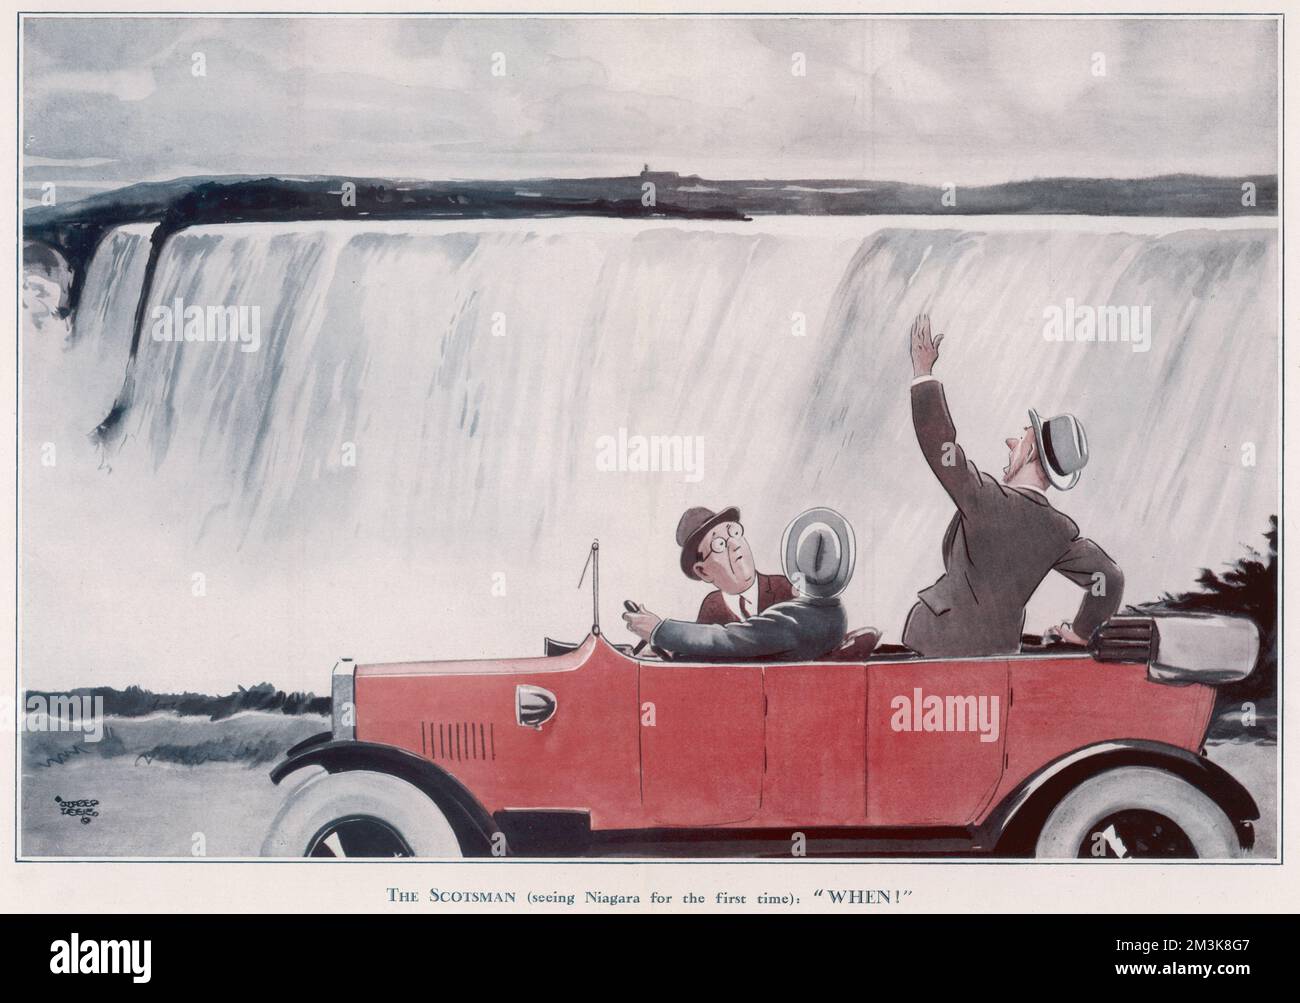 Three gentlemen looking at Niagara Falls from their car     Date: 1928 Stock Photo